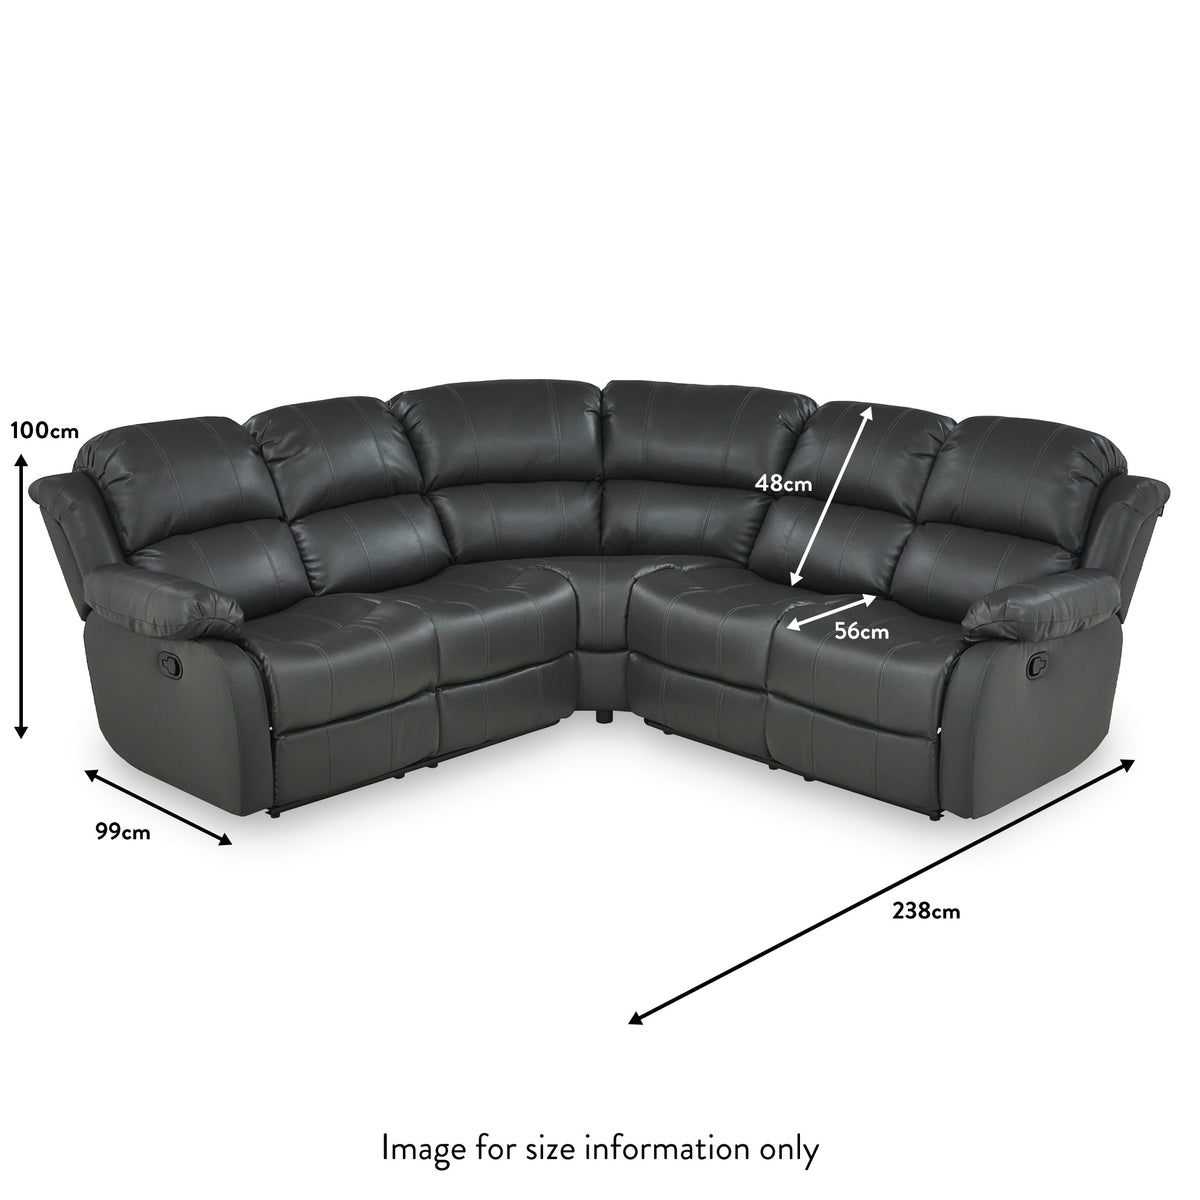 Anton Grey Leather Reclining Corner Sofa dimensions